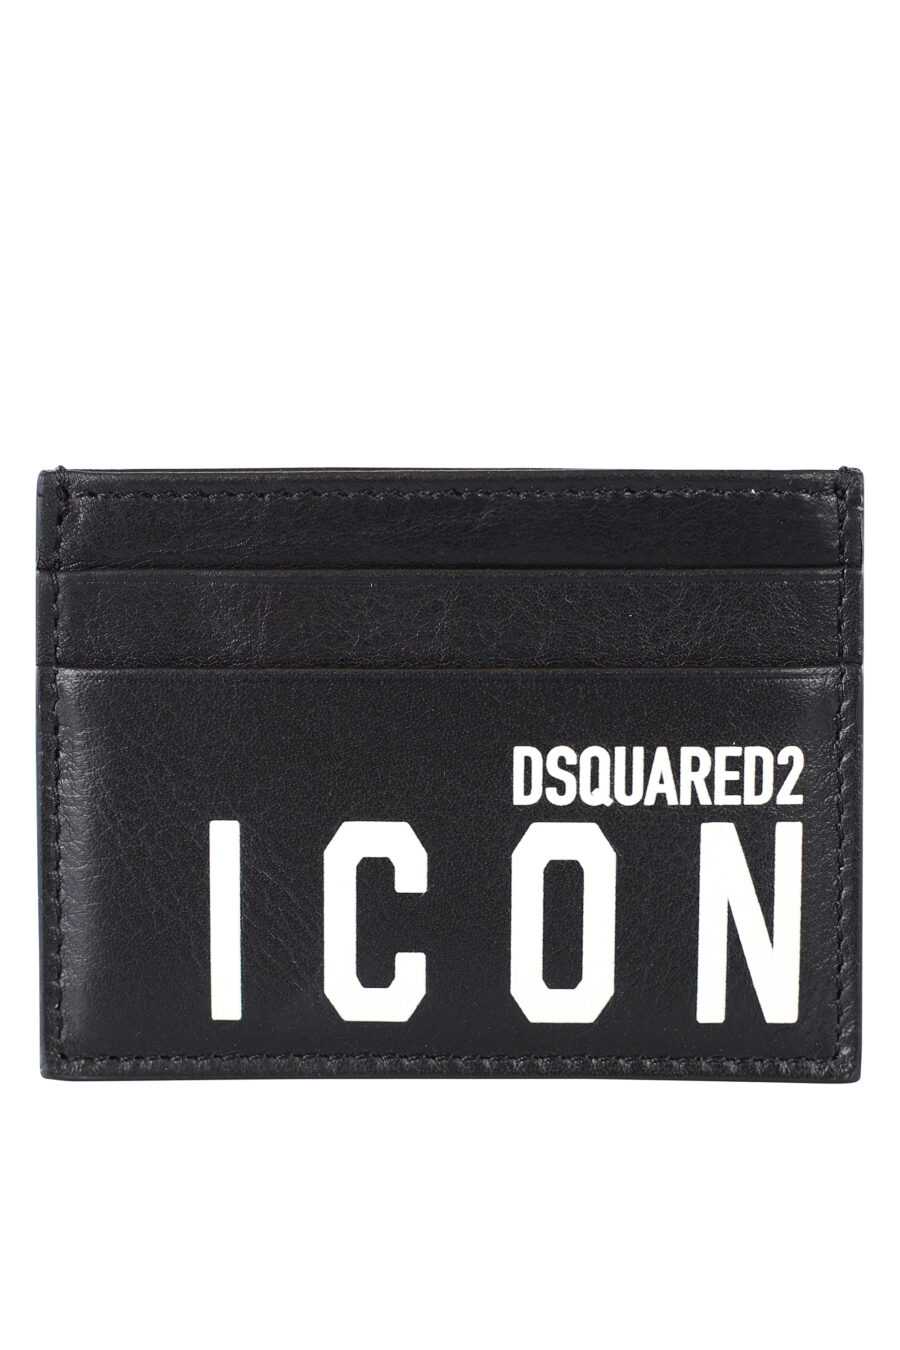 Schwarzer Kartenhalter mit "Icon"-Logo - IMG 7177